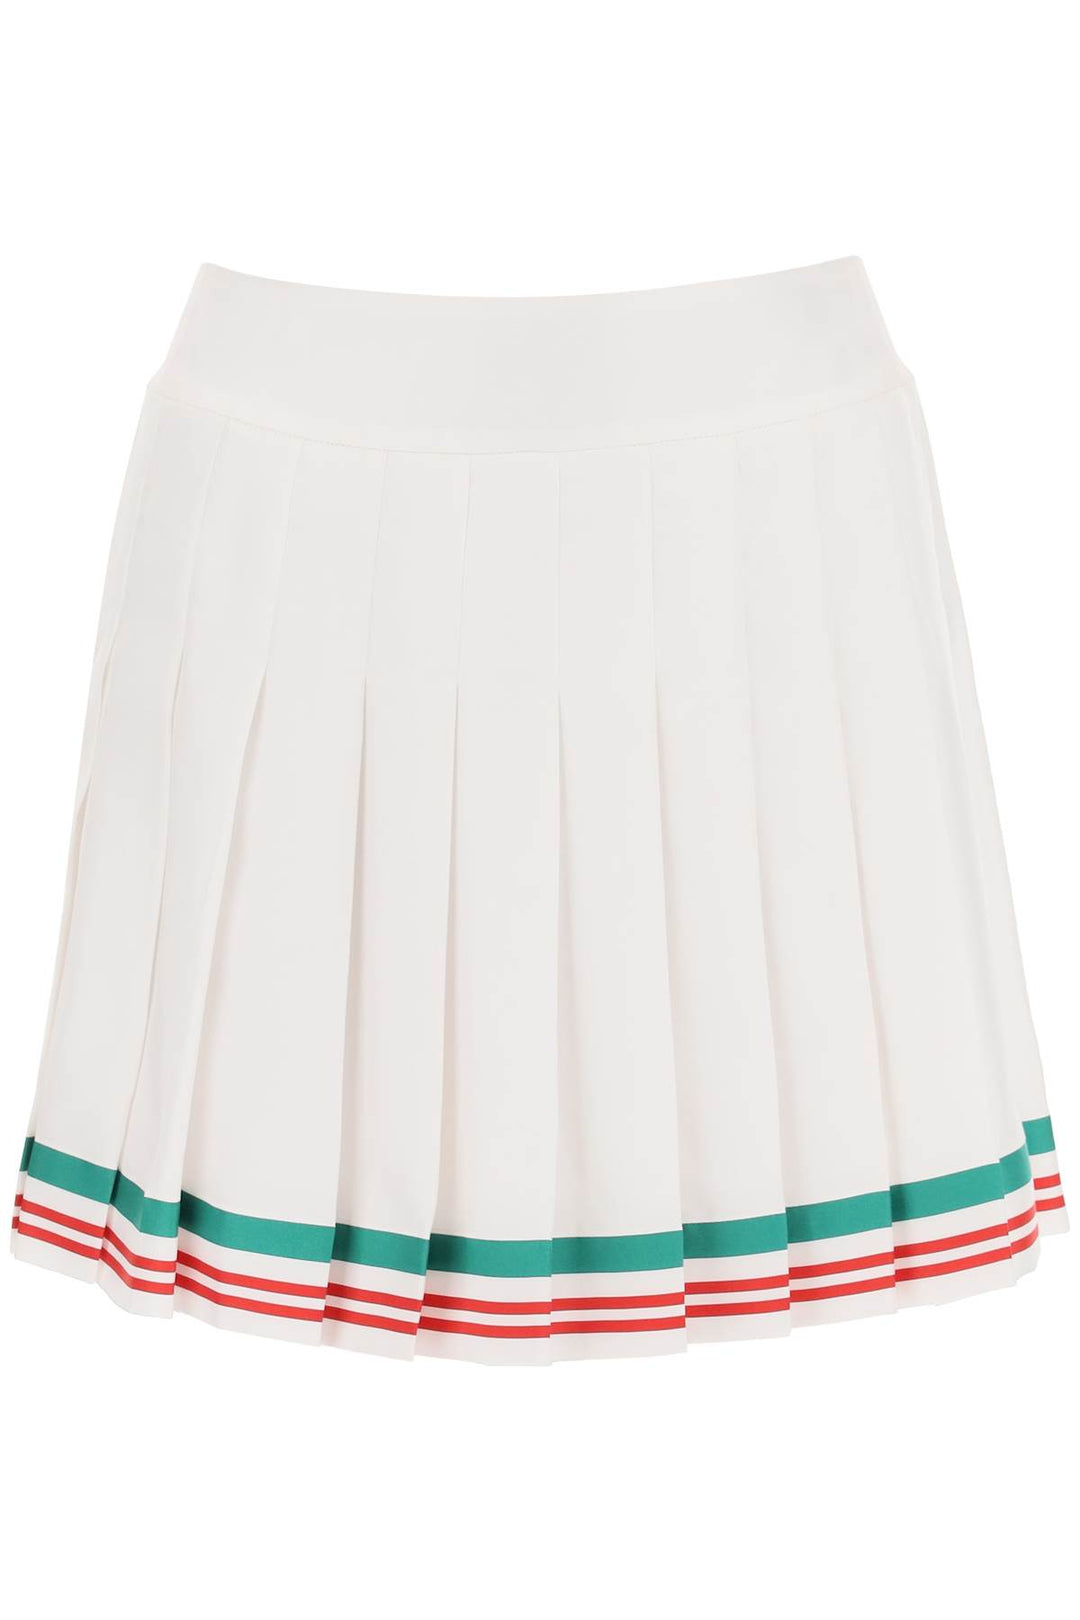 Casablanca Casaway Tennis Mini Skirt   Bianco